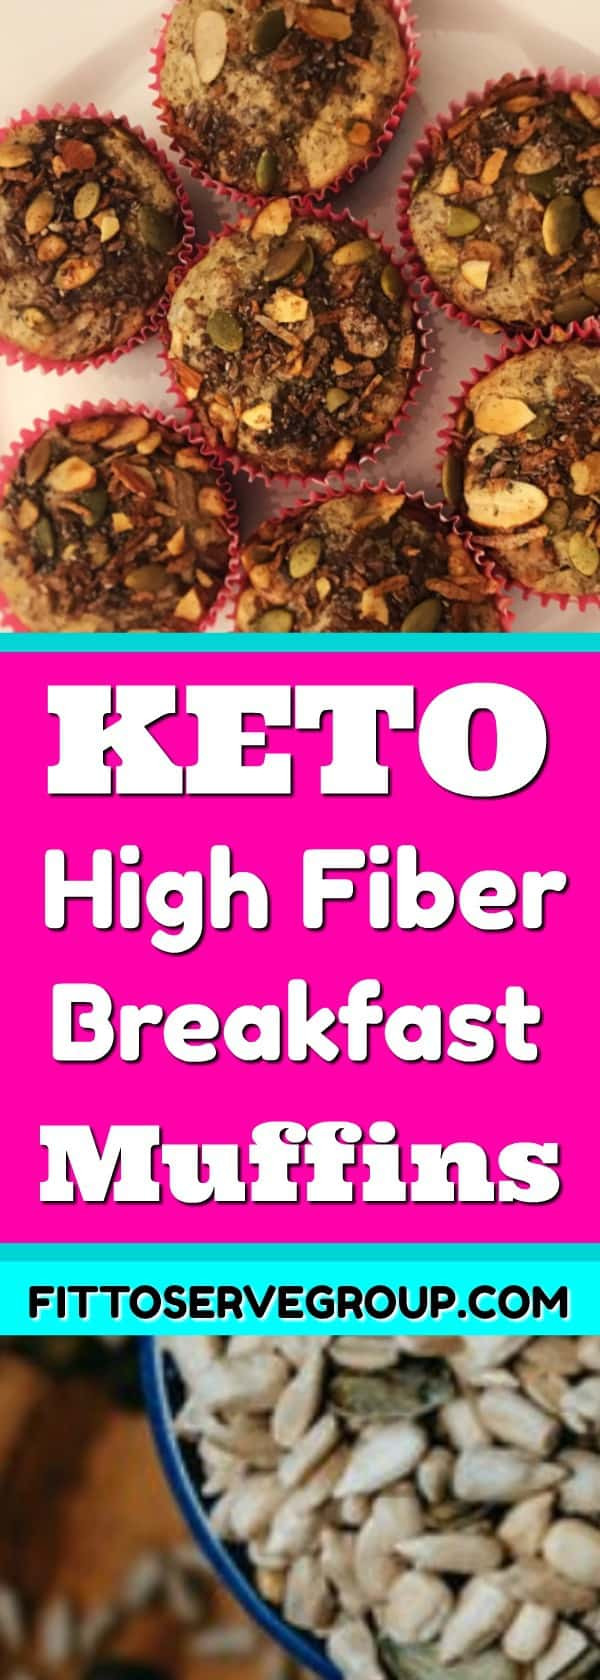 High Fiber Keto Recipes
 Keto High Fiber Breakfast Muffins · Fittoserve Group